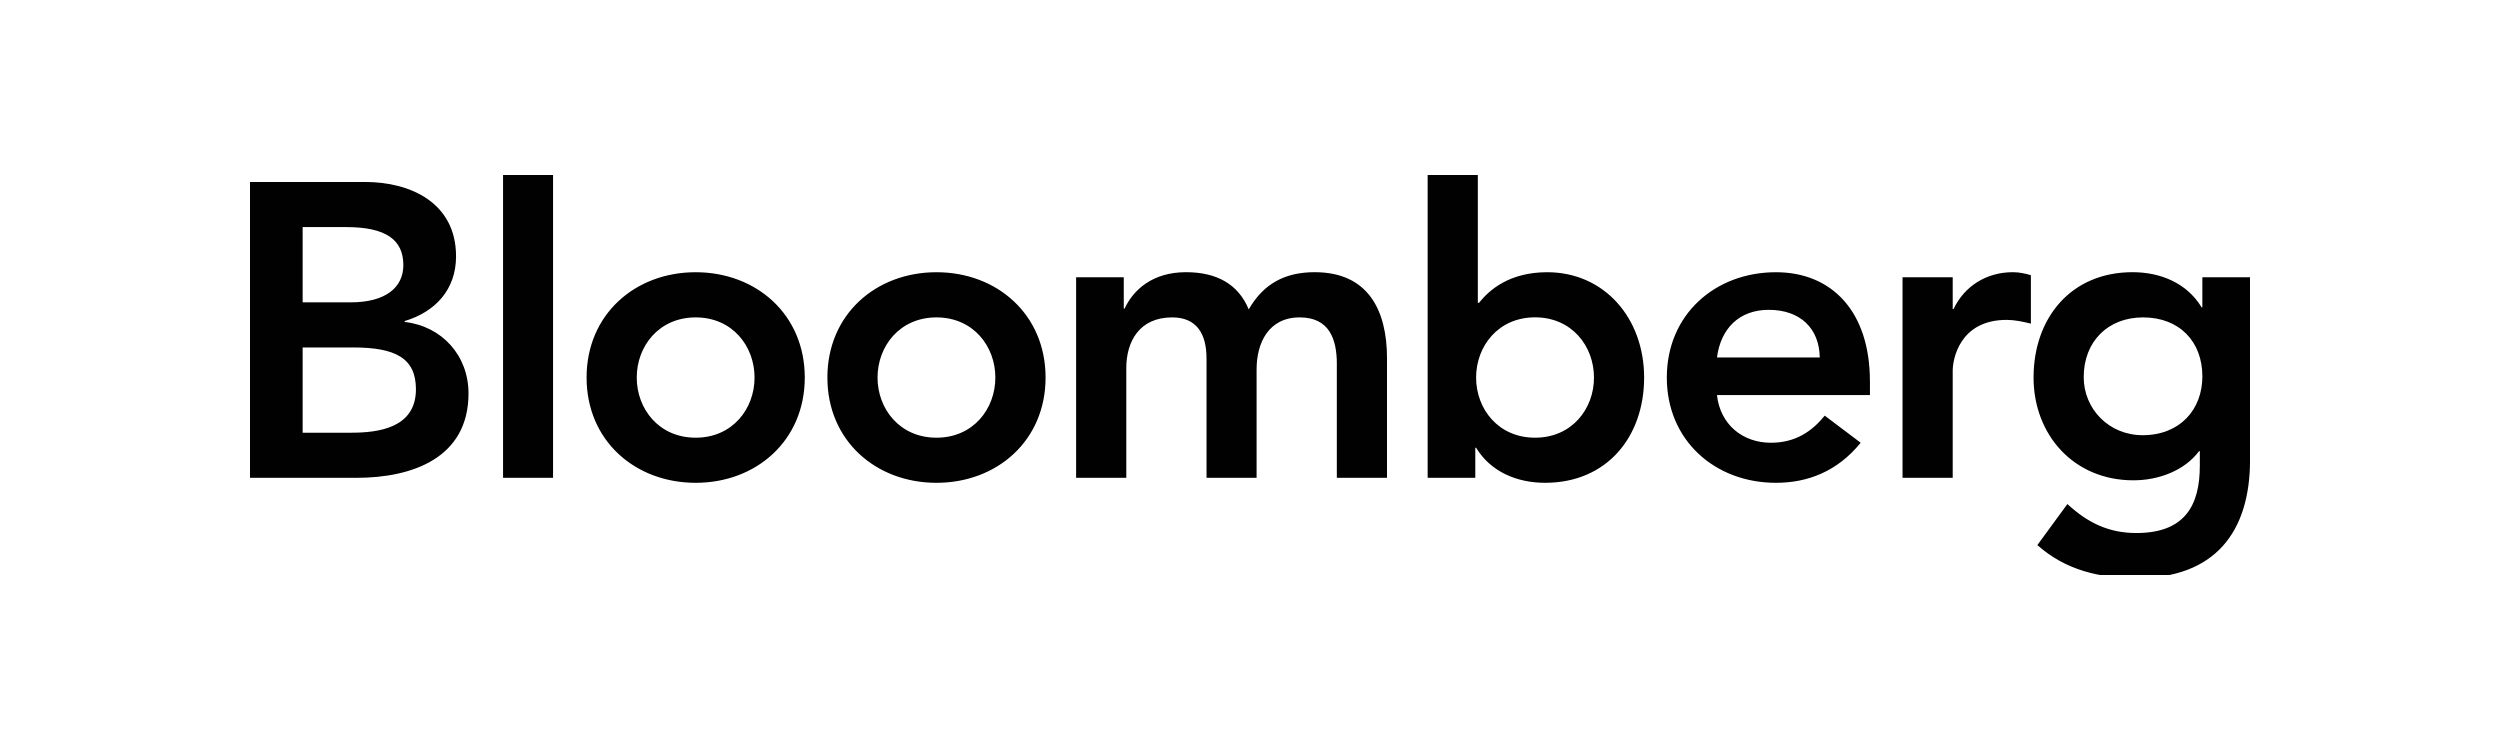 Bloomberg logo